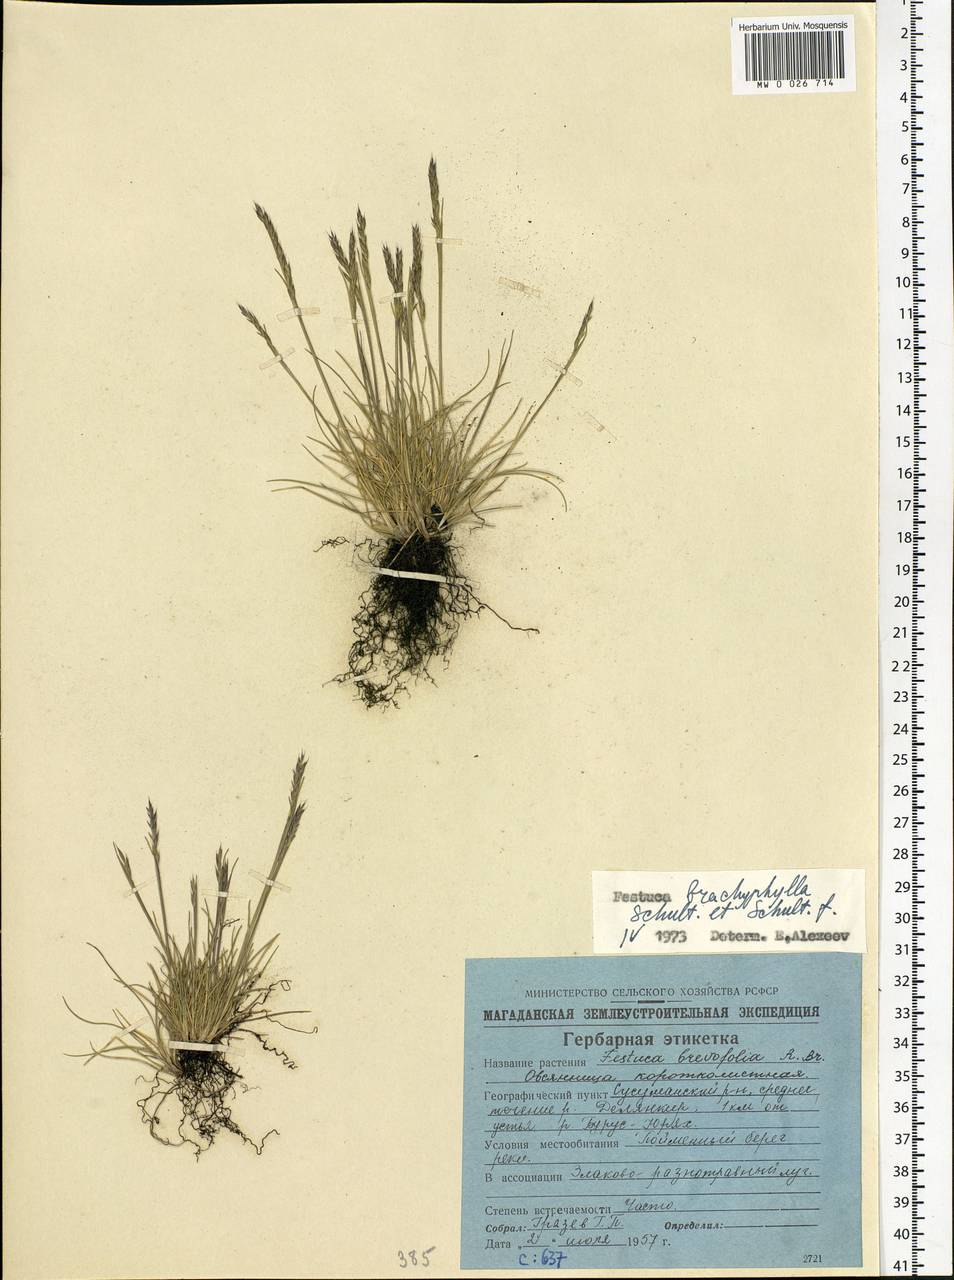 Festuca brachyphylla Schult. & Schult.f., Siberia, Chukotka & Kamchatka (S7) (Russia)